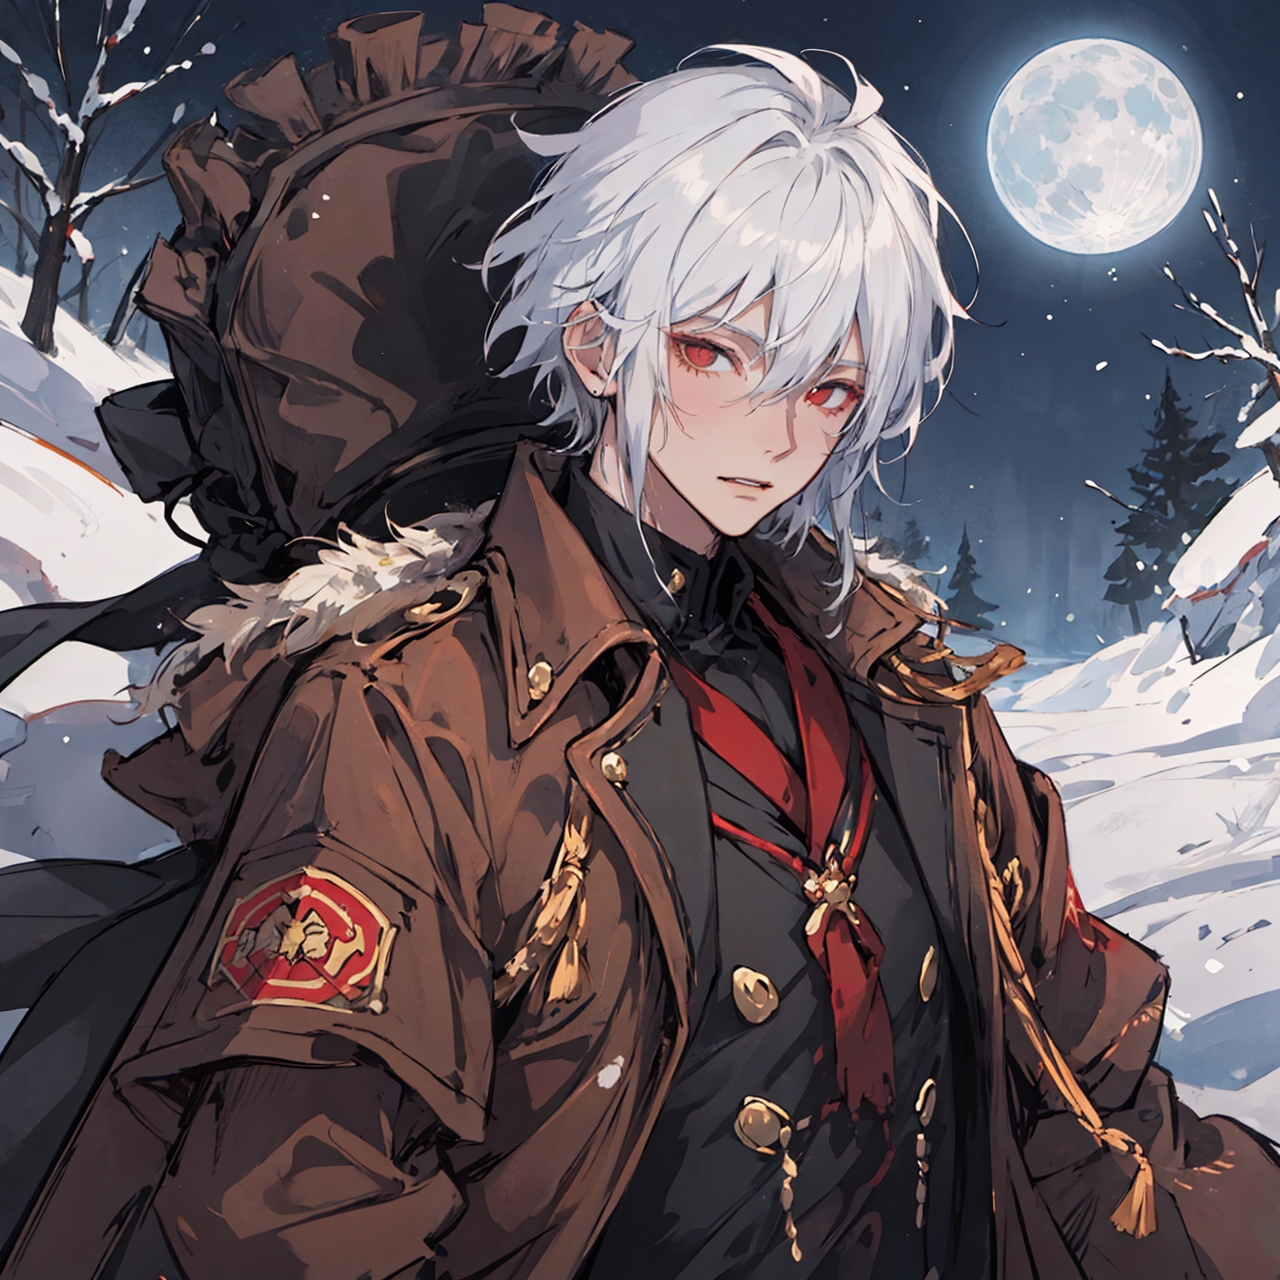 Anime Pop Heart — ☆ 【Darkavey】 「 Winter Coat 」 ☆ ✓ republished